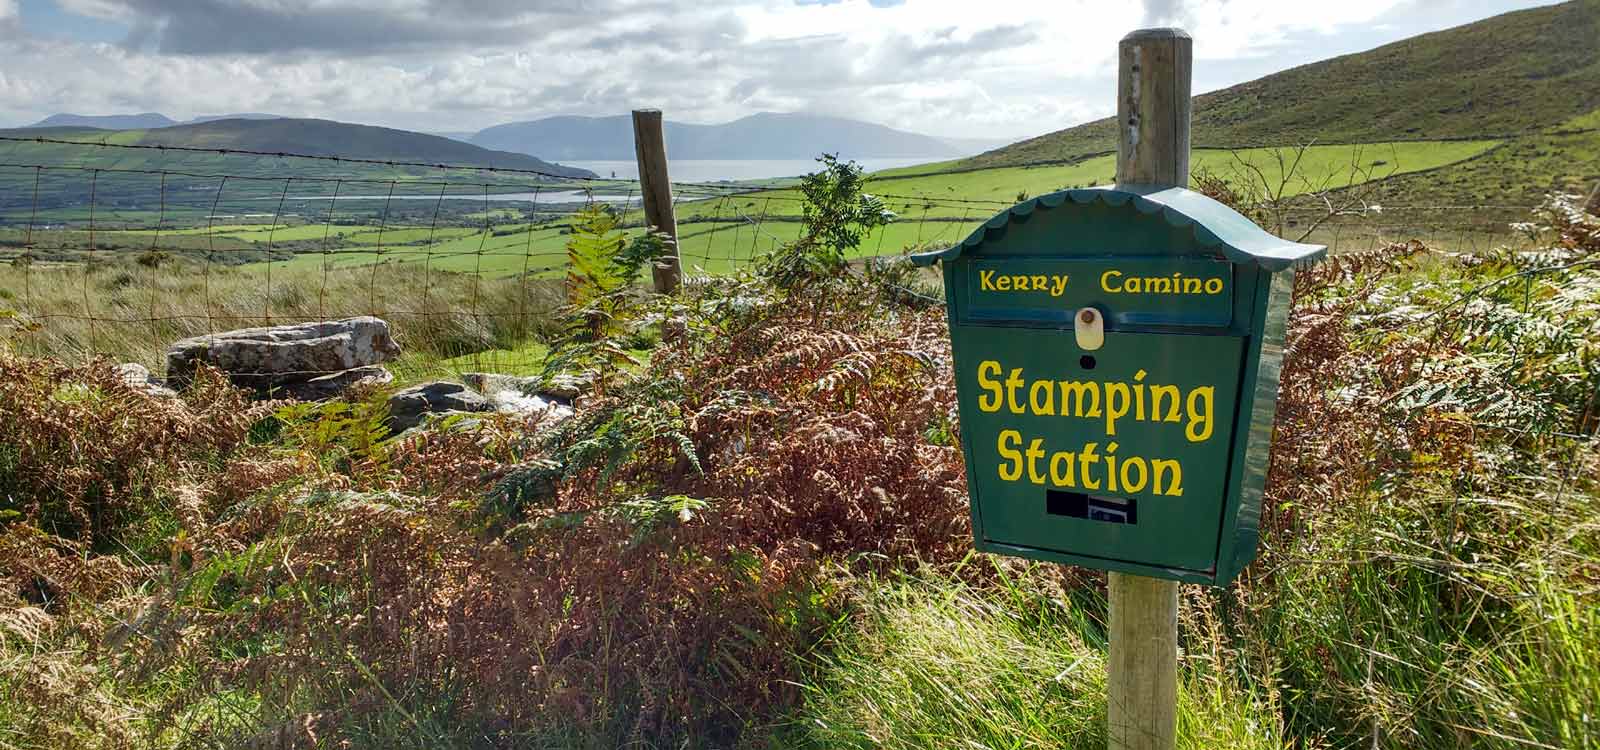 Kerry Camino stamping station